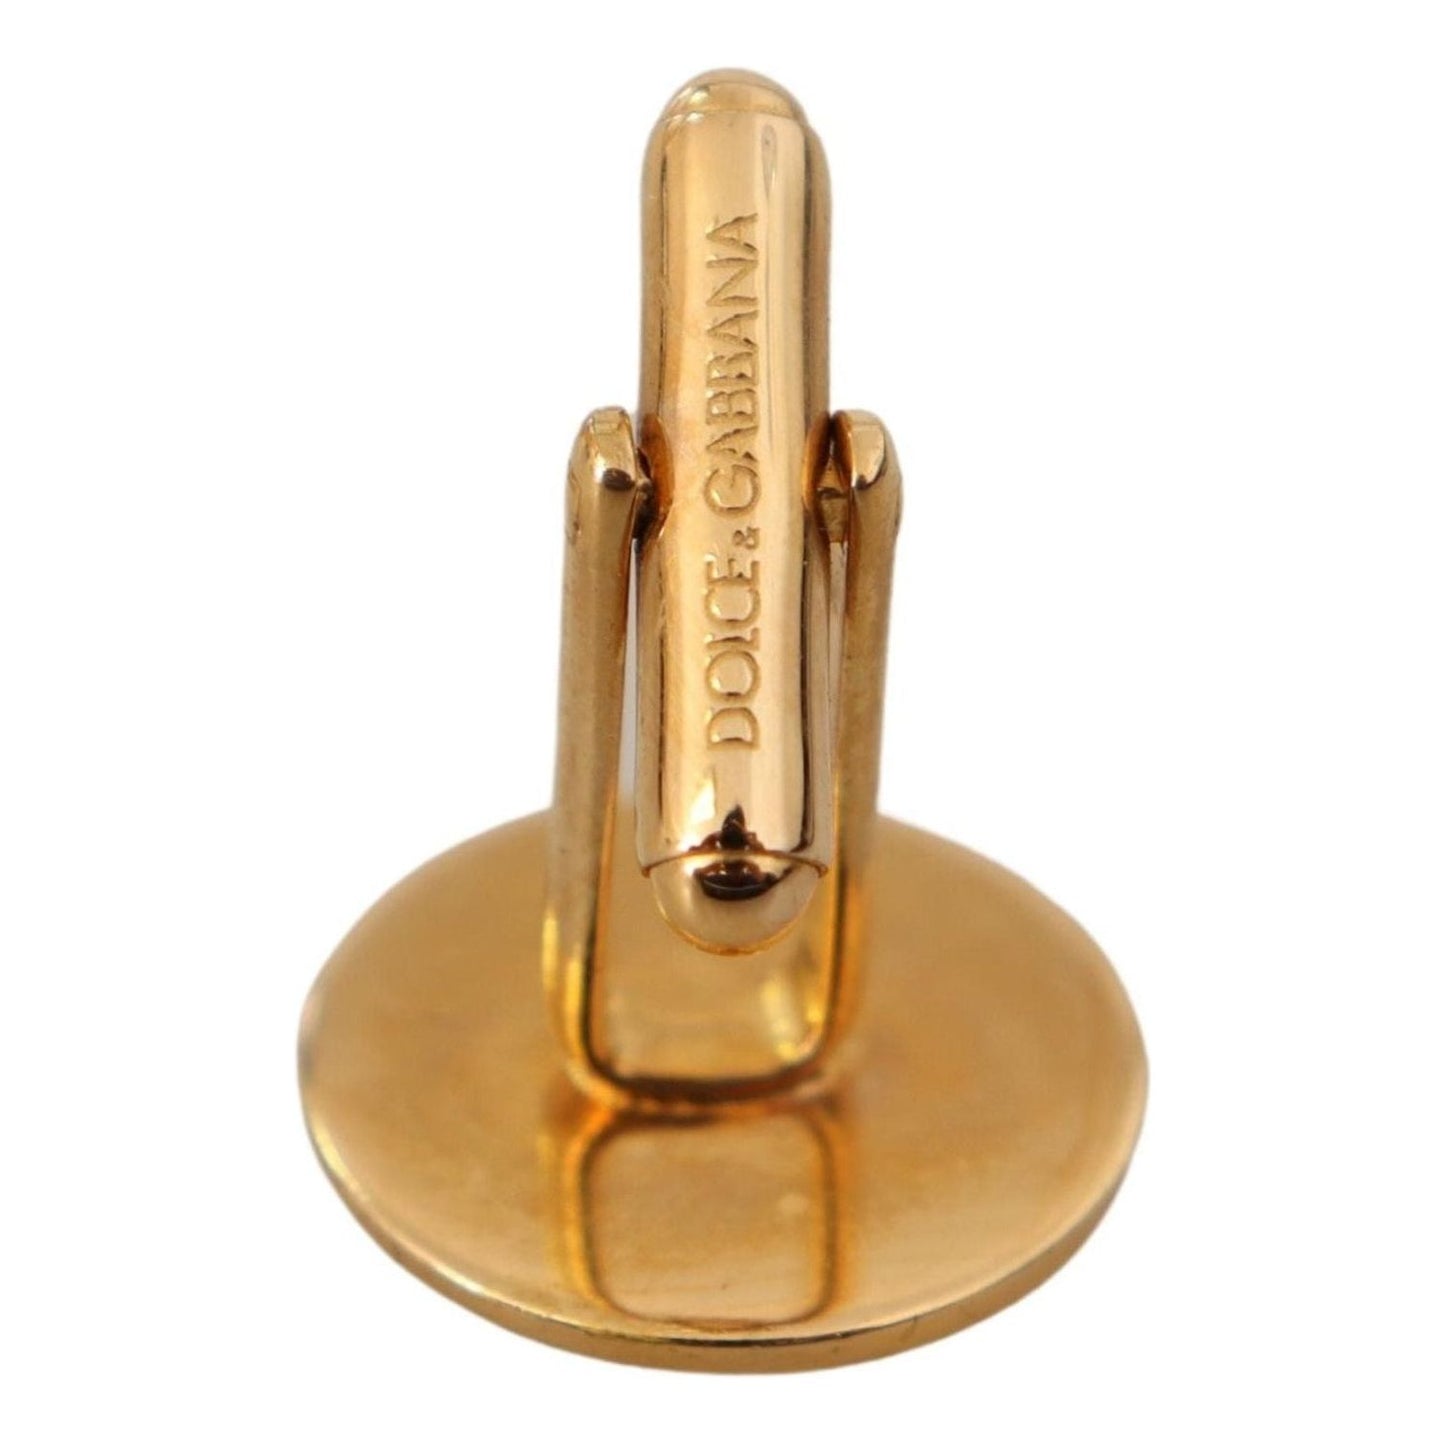 Dolce & Gabbana Elegant Gold-Plated Round Cufflinks gold-plated-brass-round-pin-men-cufflinks-1 Cufflinks IMG_1779-54ba9806-d6a.jpg